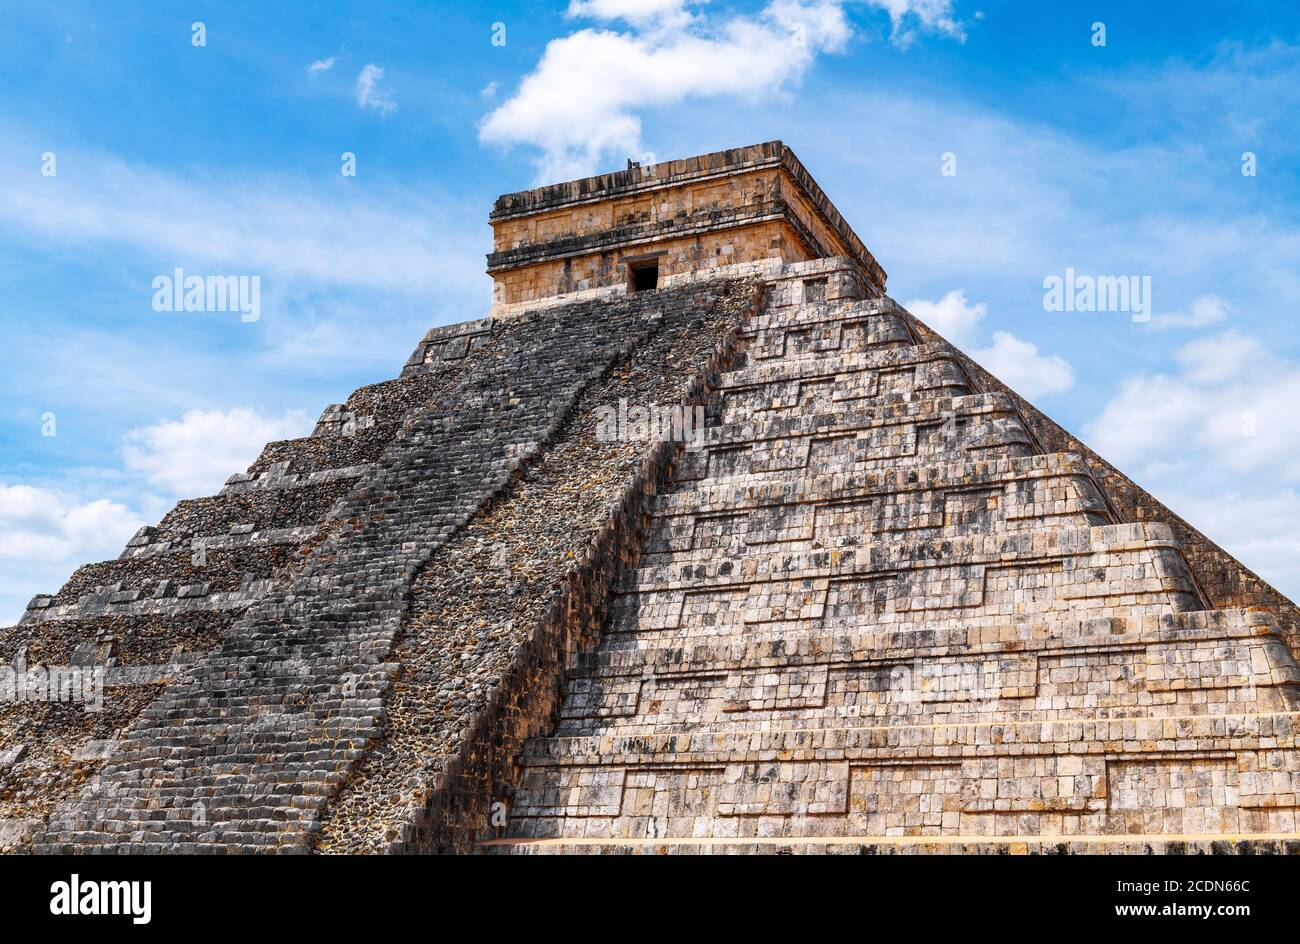 The maya temple pyramid of Kukulkan or El Castillo in Chichen Itza, Yucatan, Mexico. Stock Photo